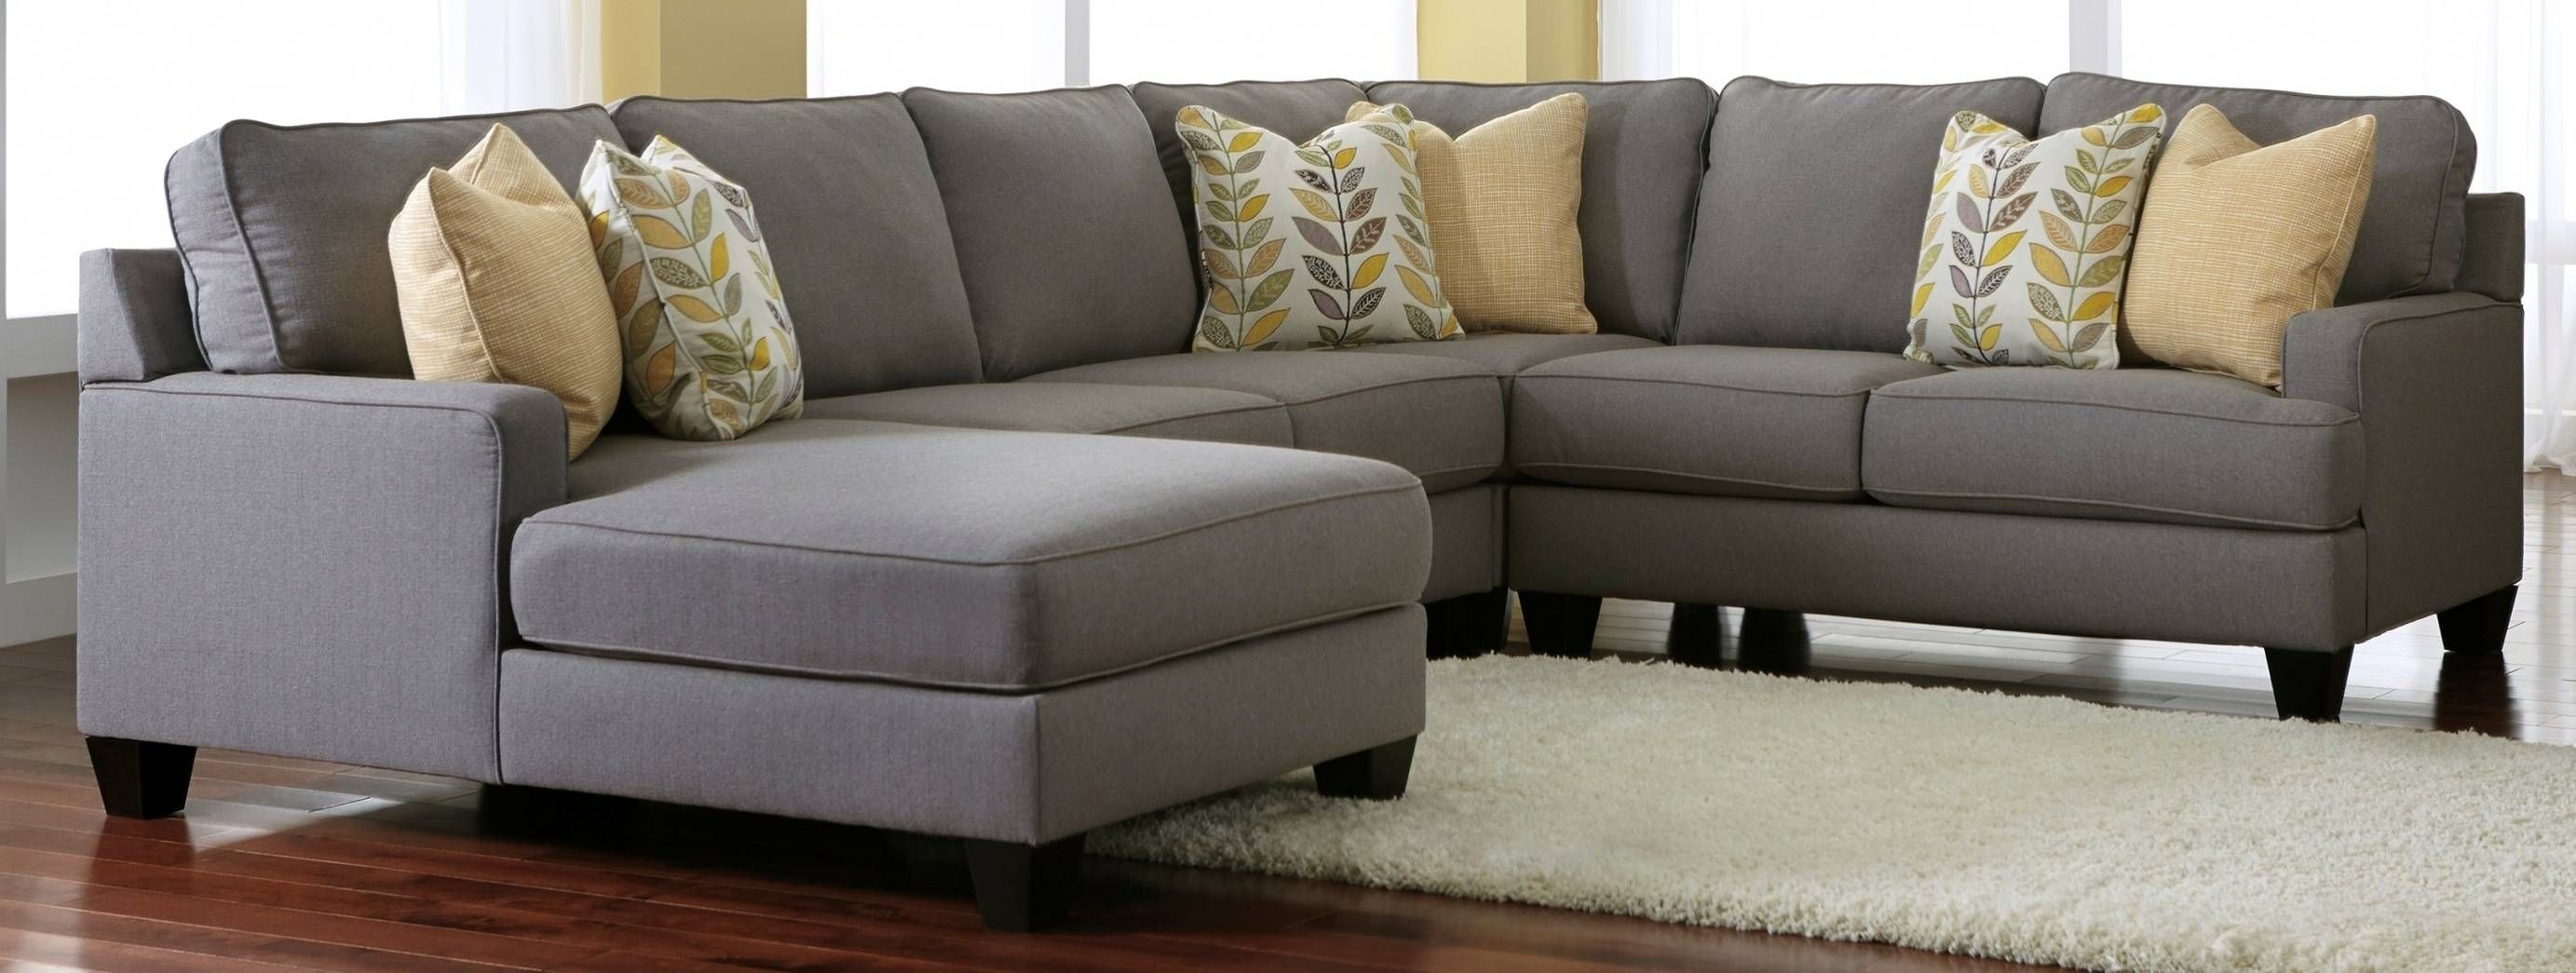 Gray Sectional Sofa Ashley Furniture – Elite Home Inside Ashley Furniture Gray Sofa (View 9 of 30)